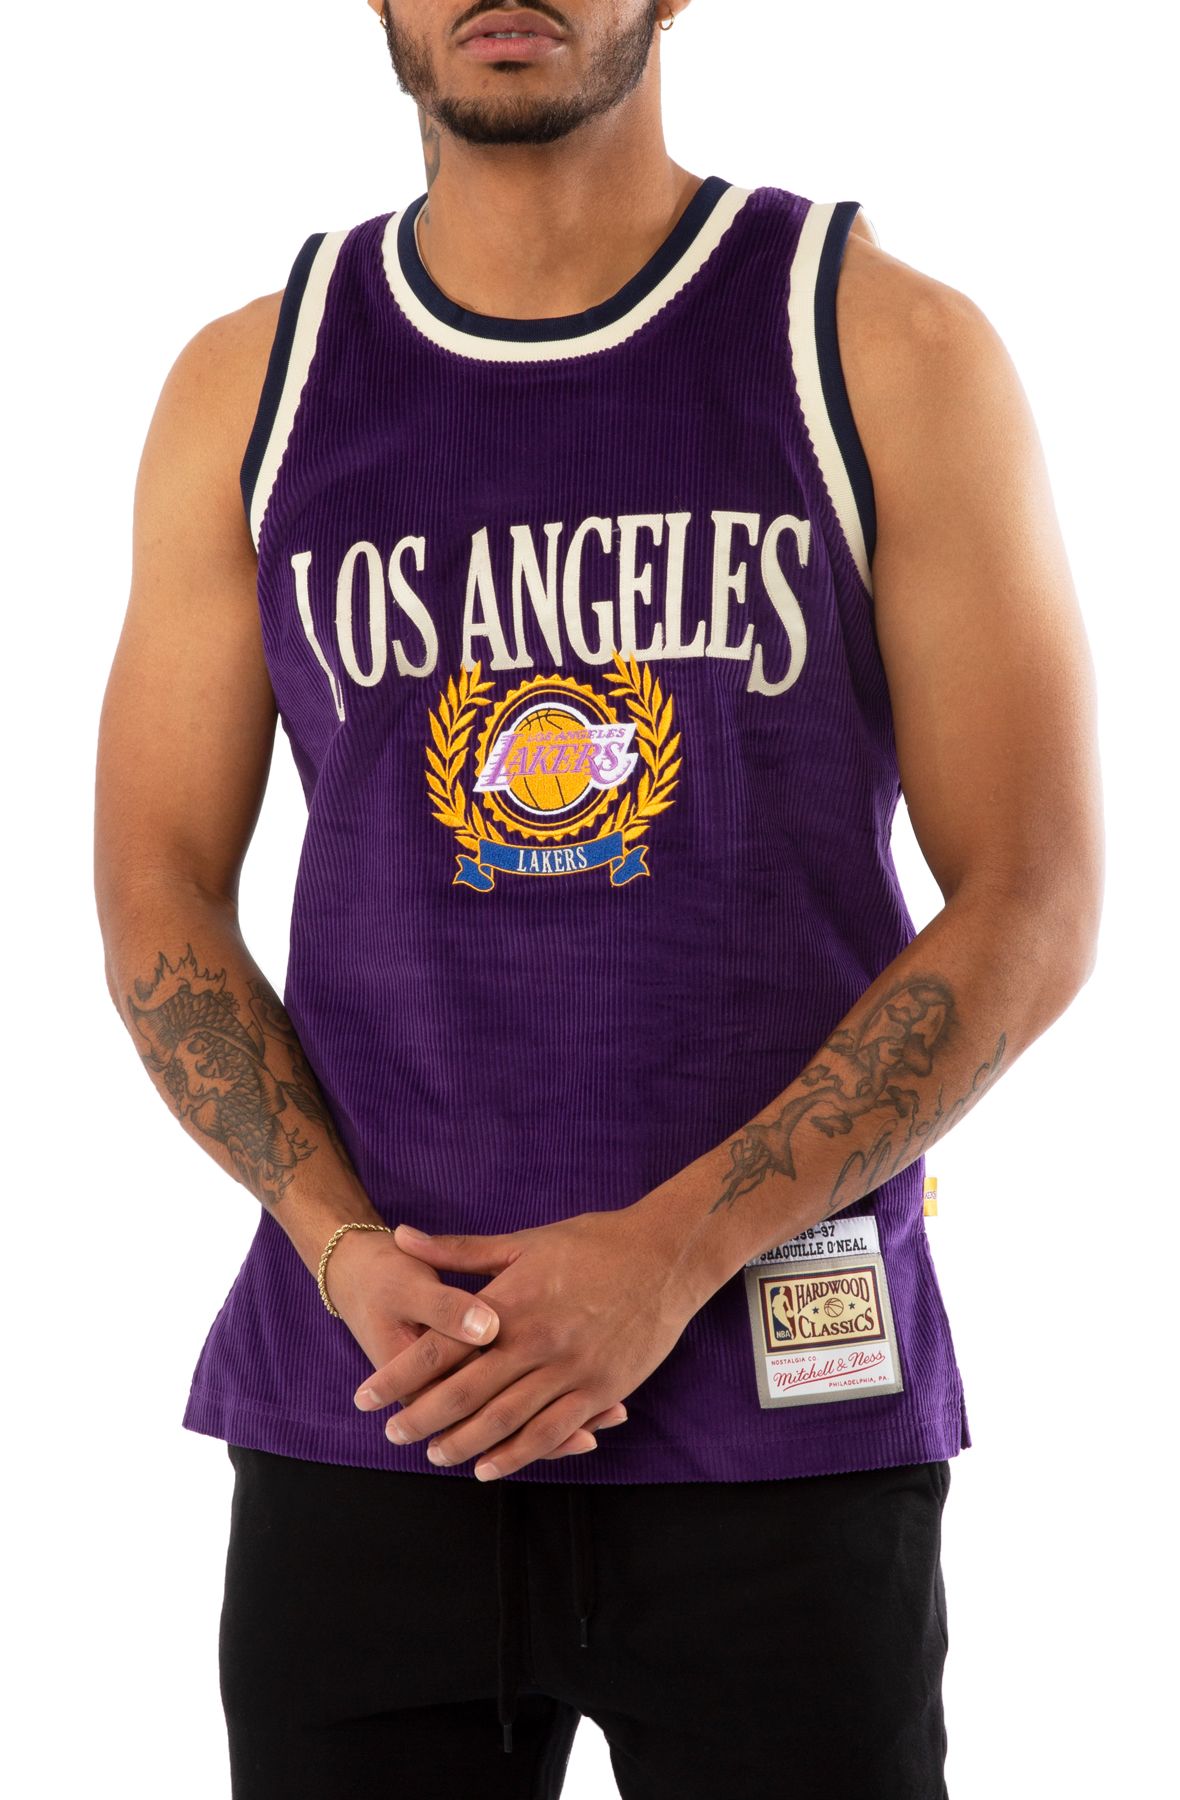 Los Angeles Lakers Logo Women'S Tank Top – BlacksWhite